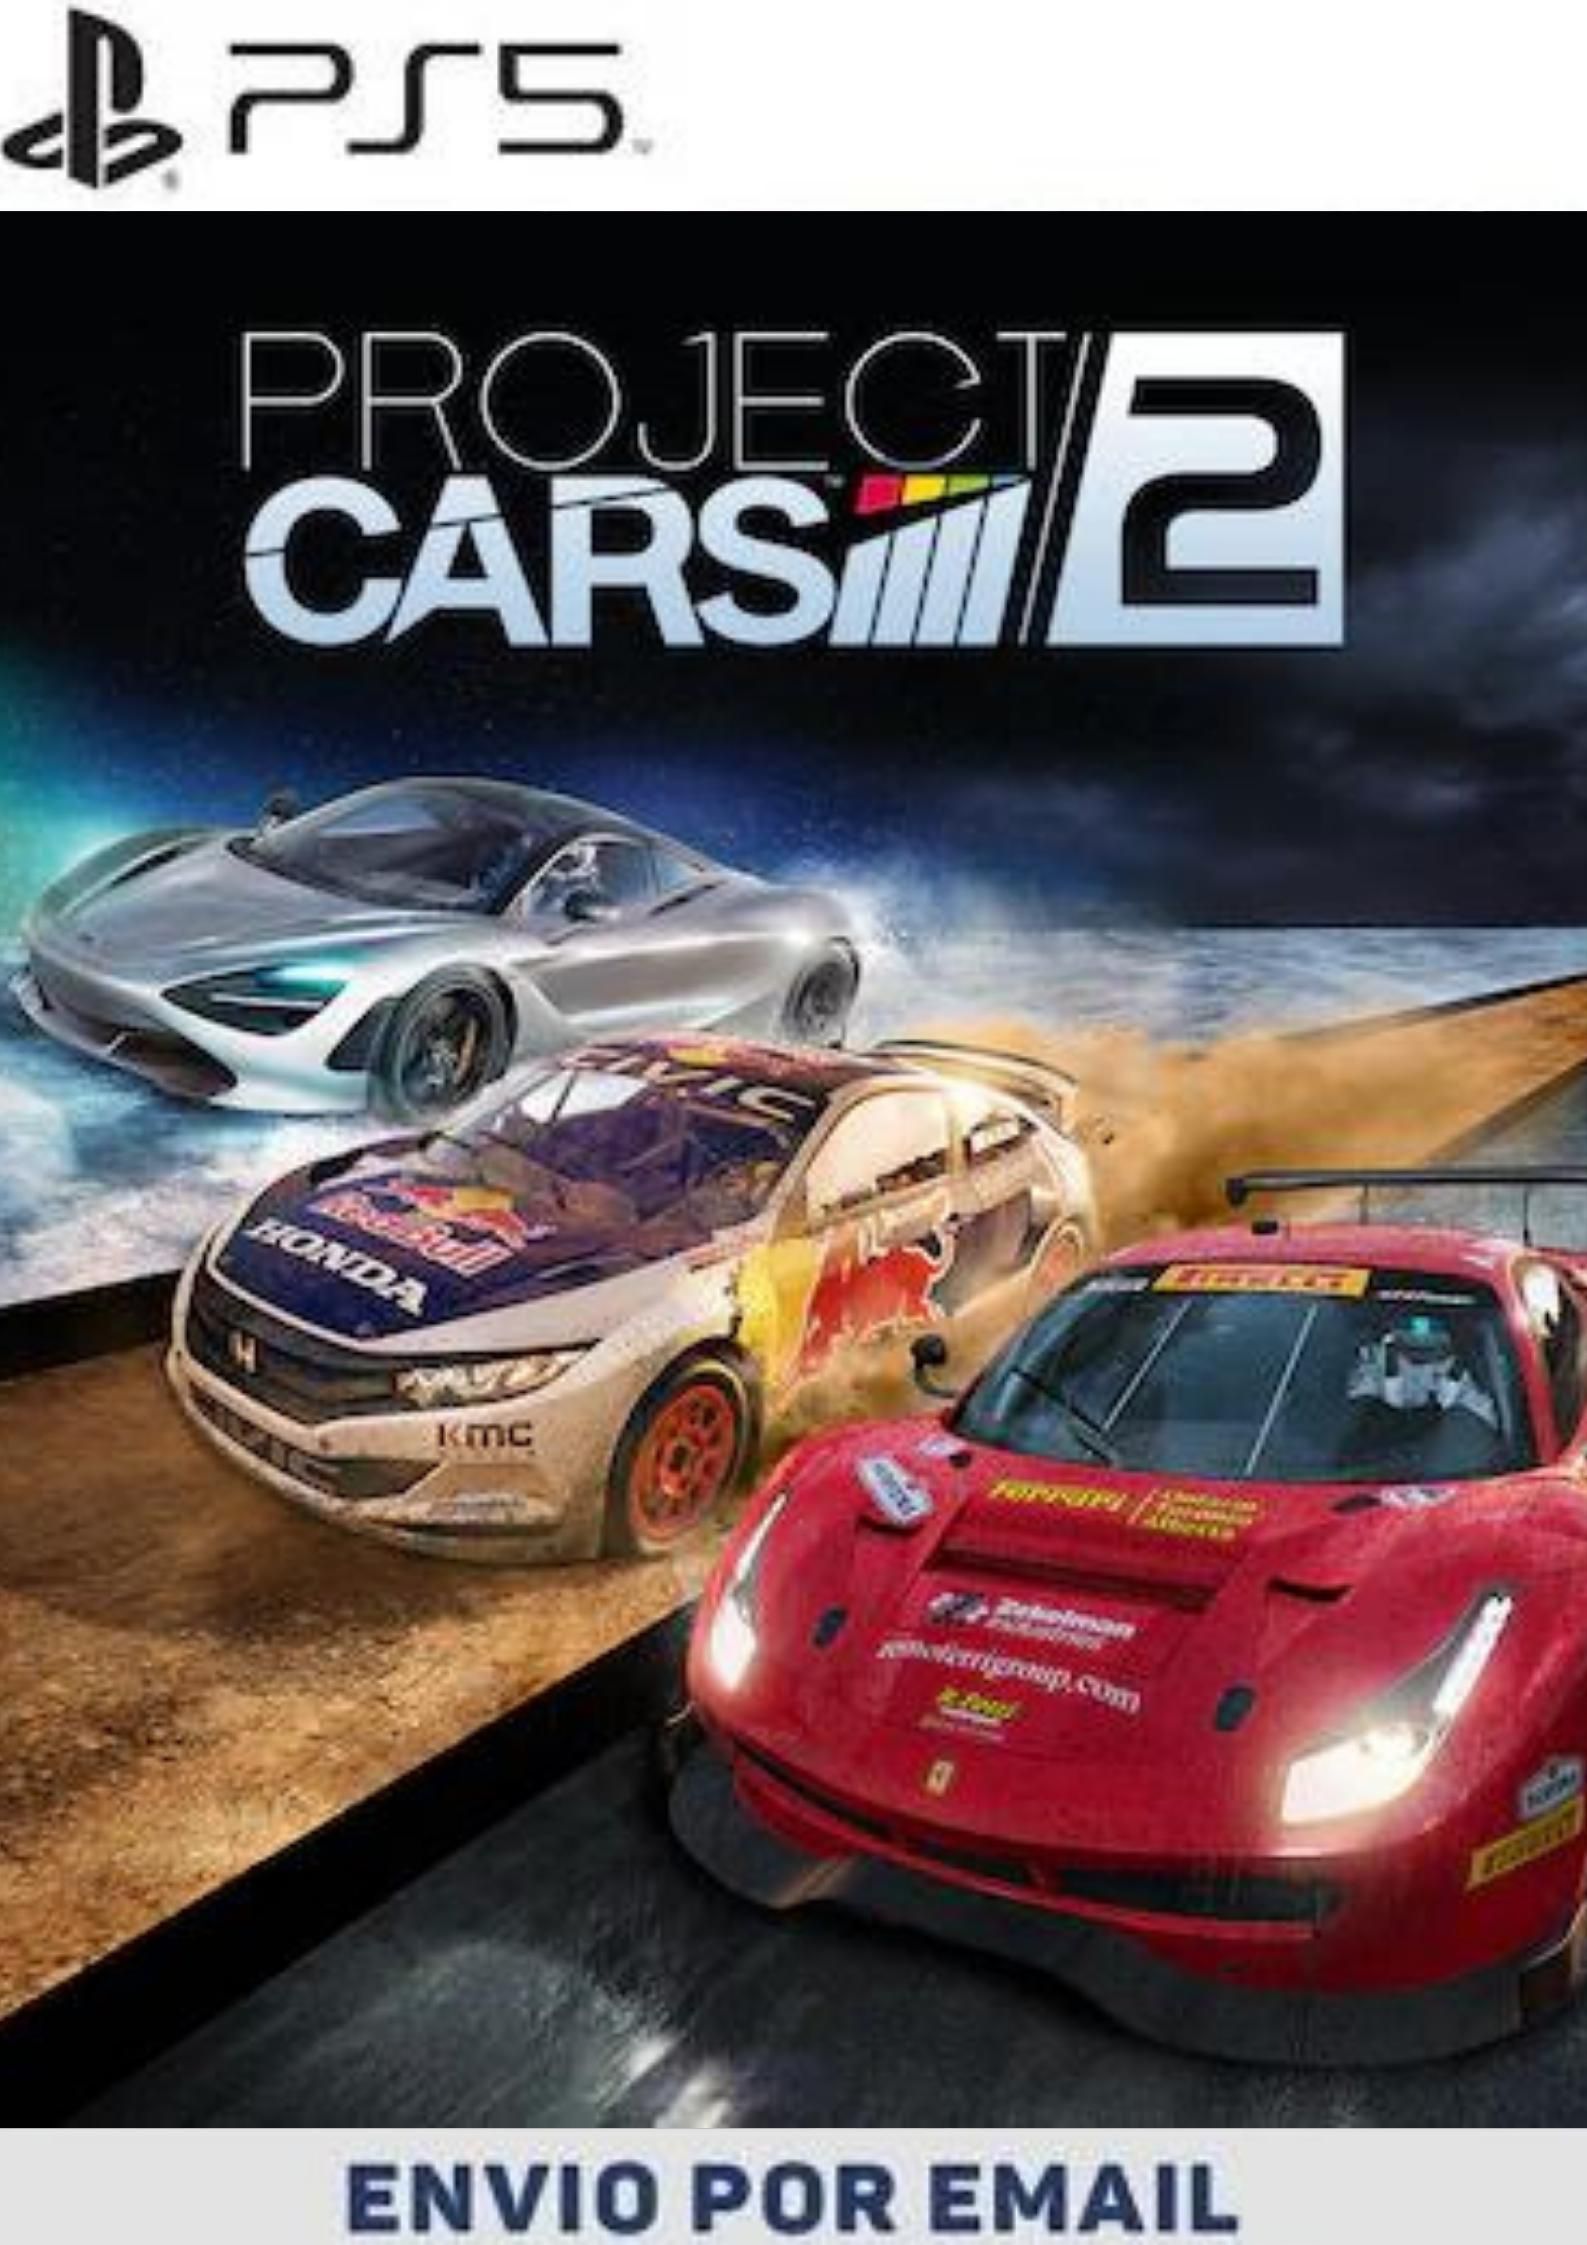 Project Cars PS4 mídia física